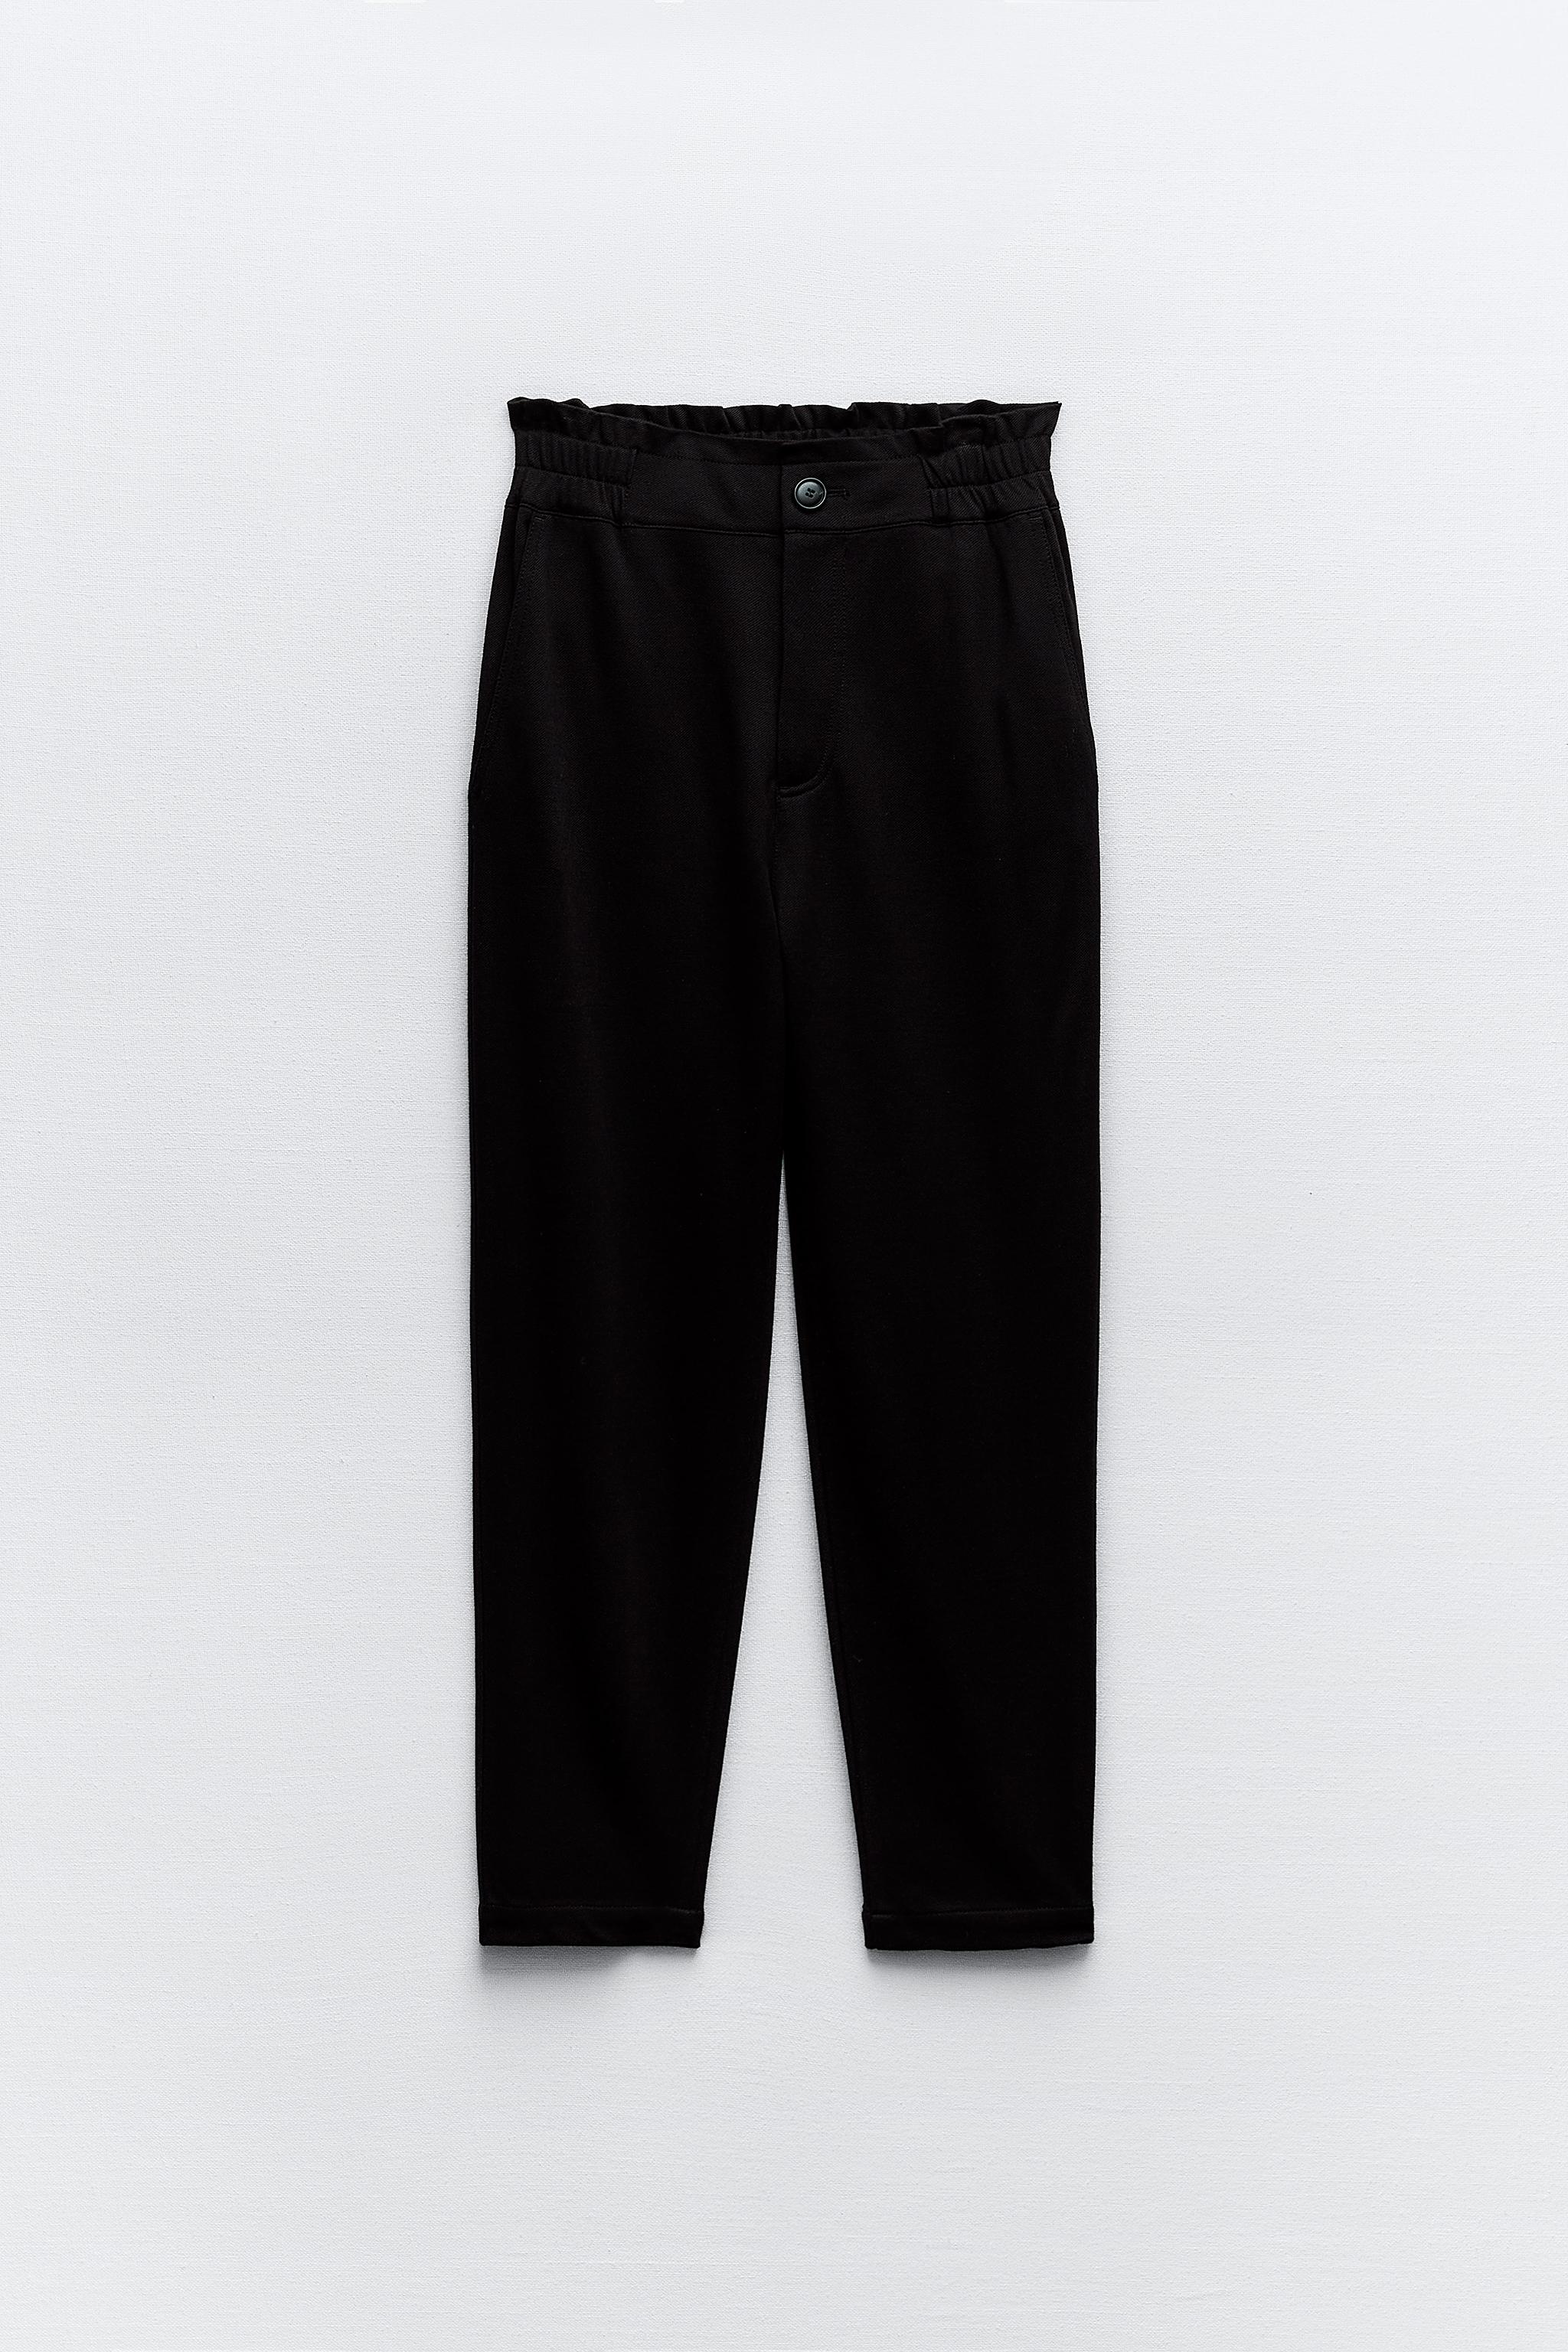 Public Desire Curve paperbag high waist pants in black